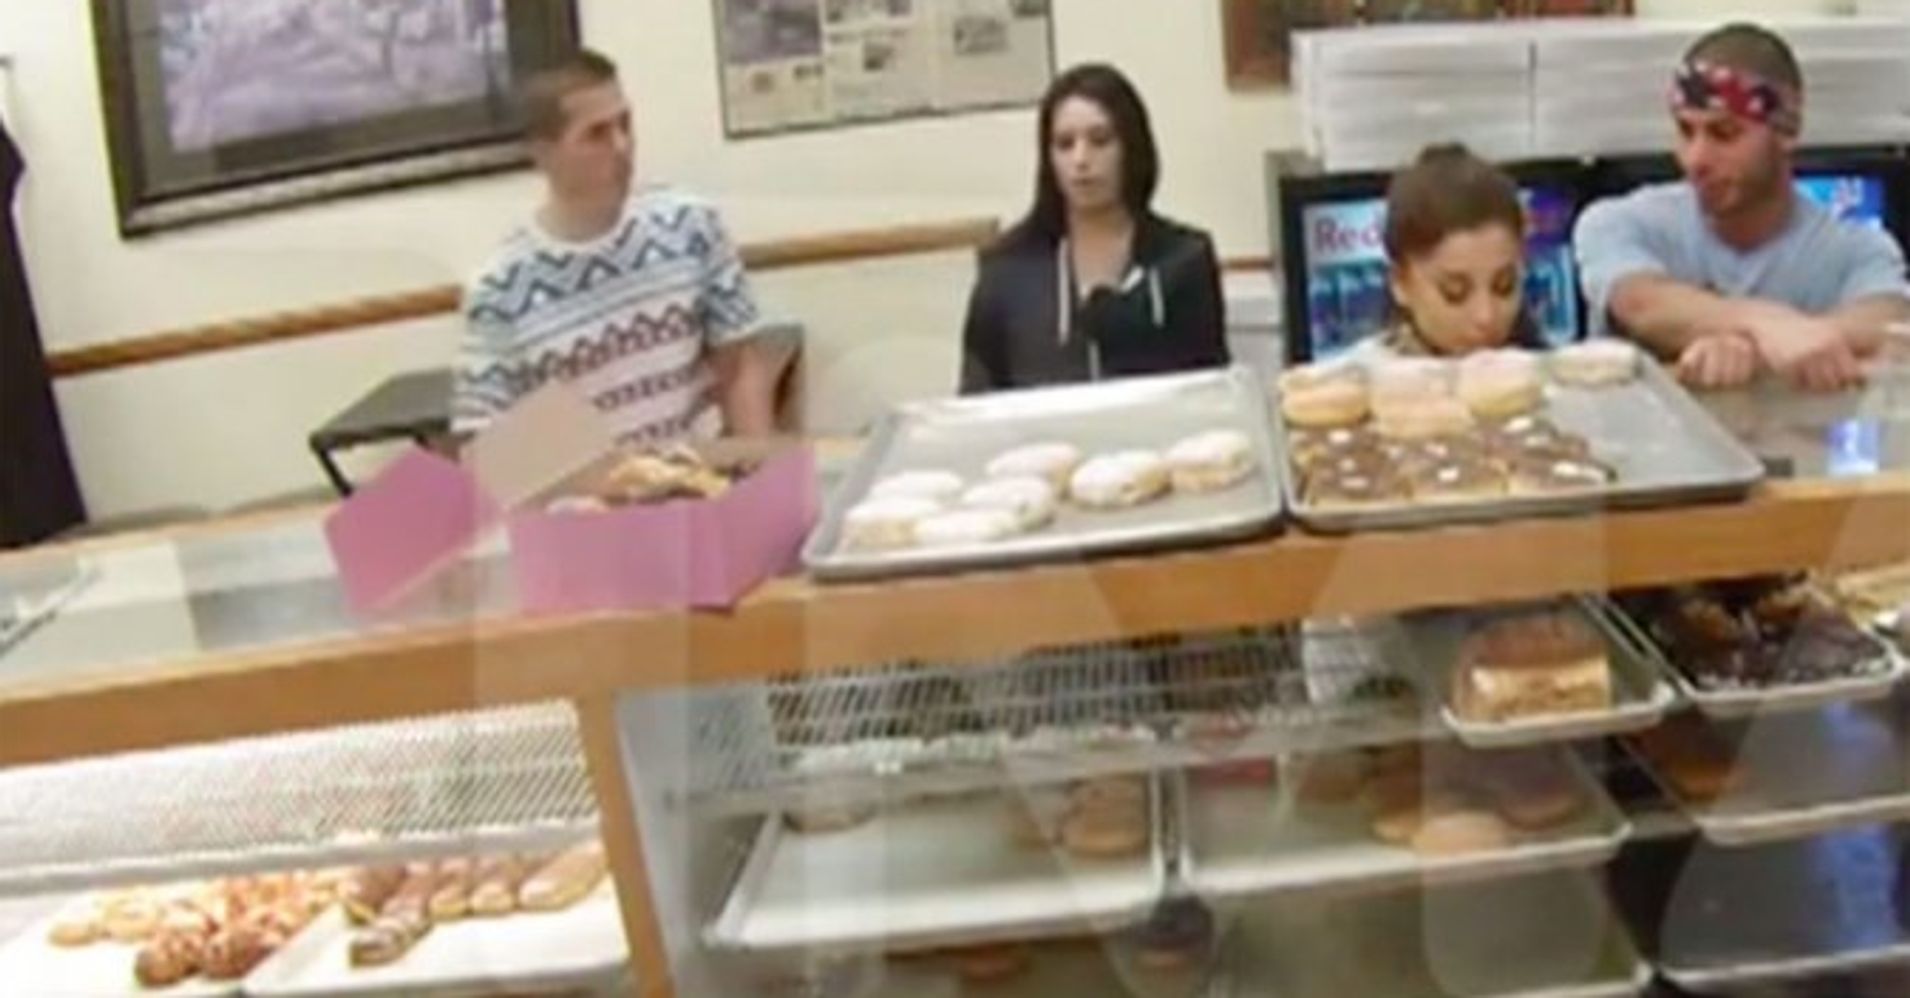 Ariana Grande Randomly Licks Donuts She Didnt Buy Before Proclaiming